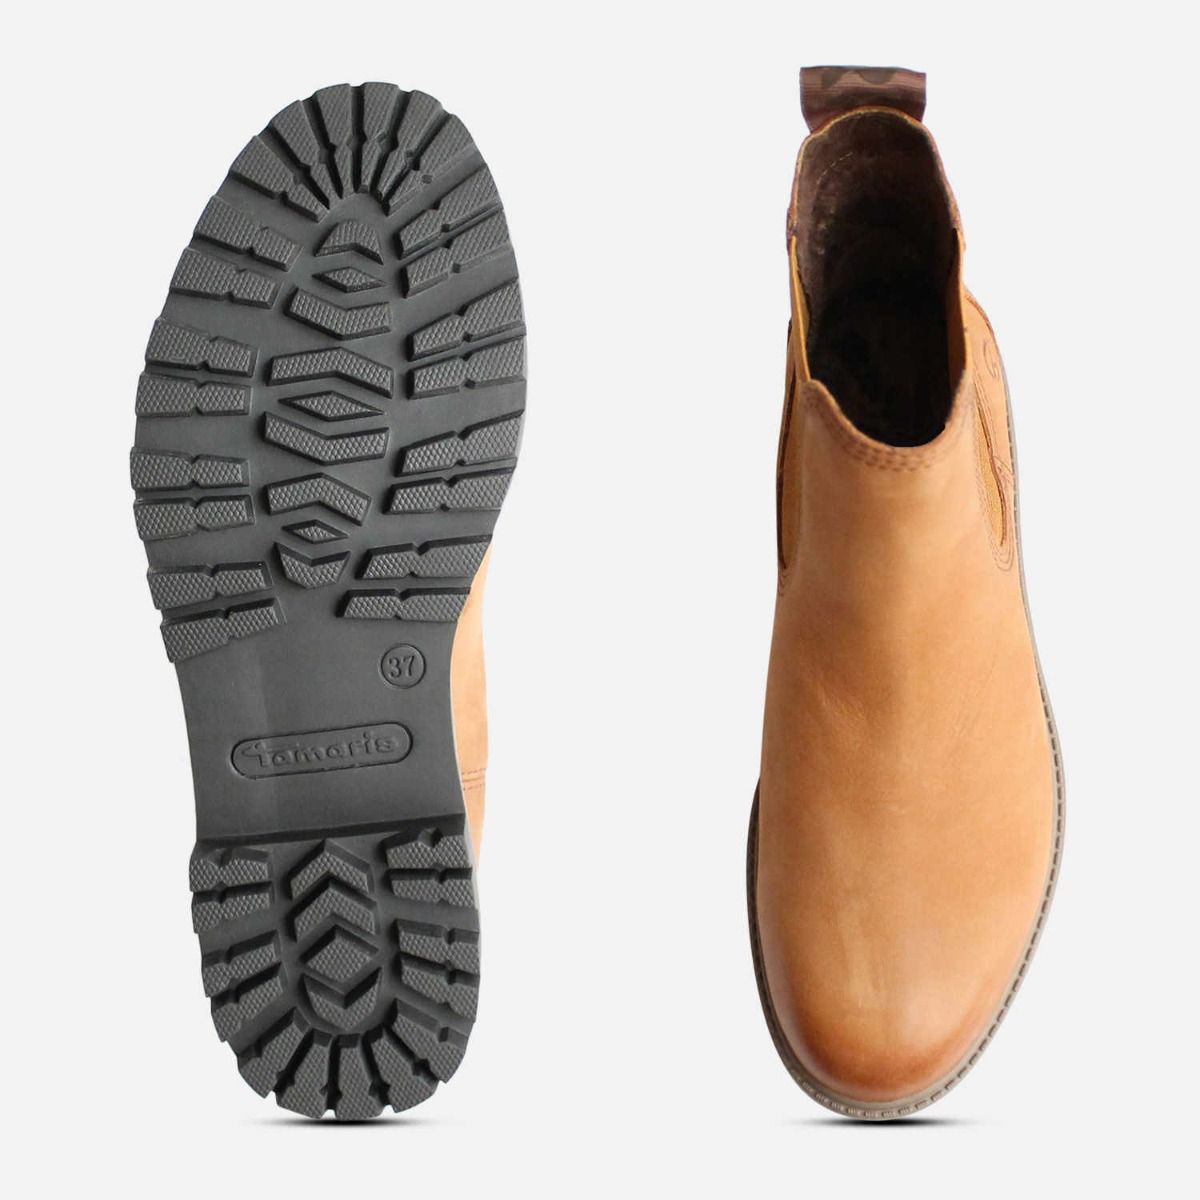 Og så videre scramble Kakadu Tamaris Slip On Beige Chelsea Boots with Rubber Sole